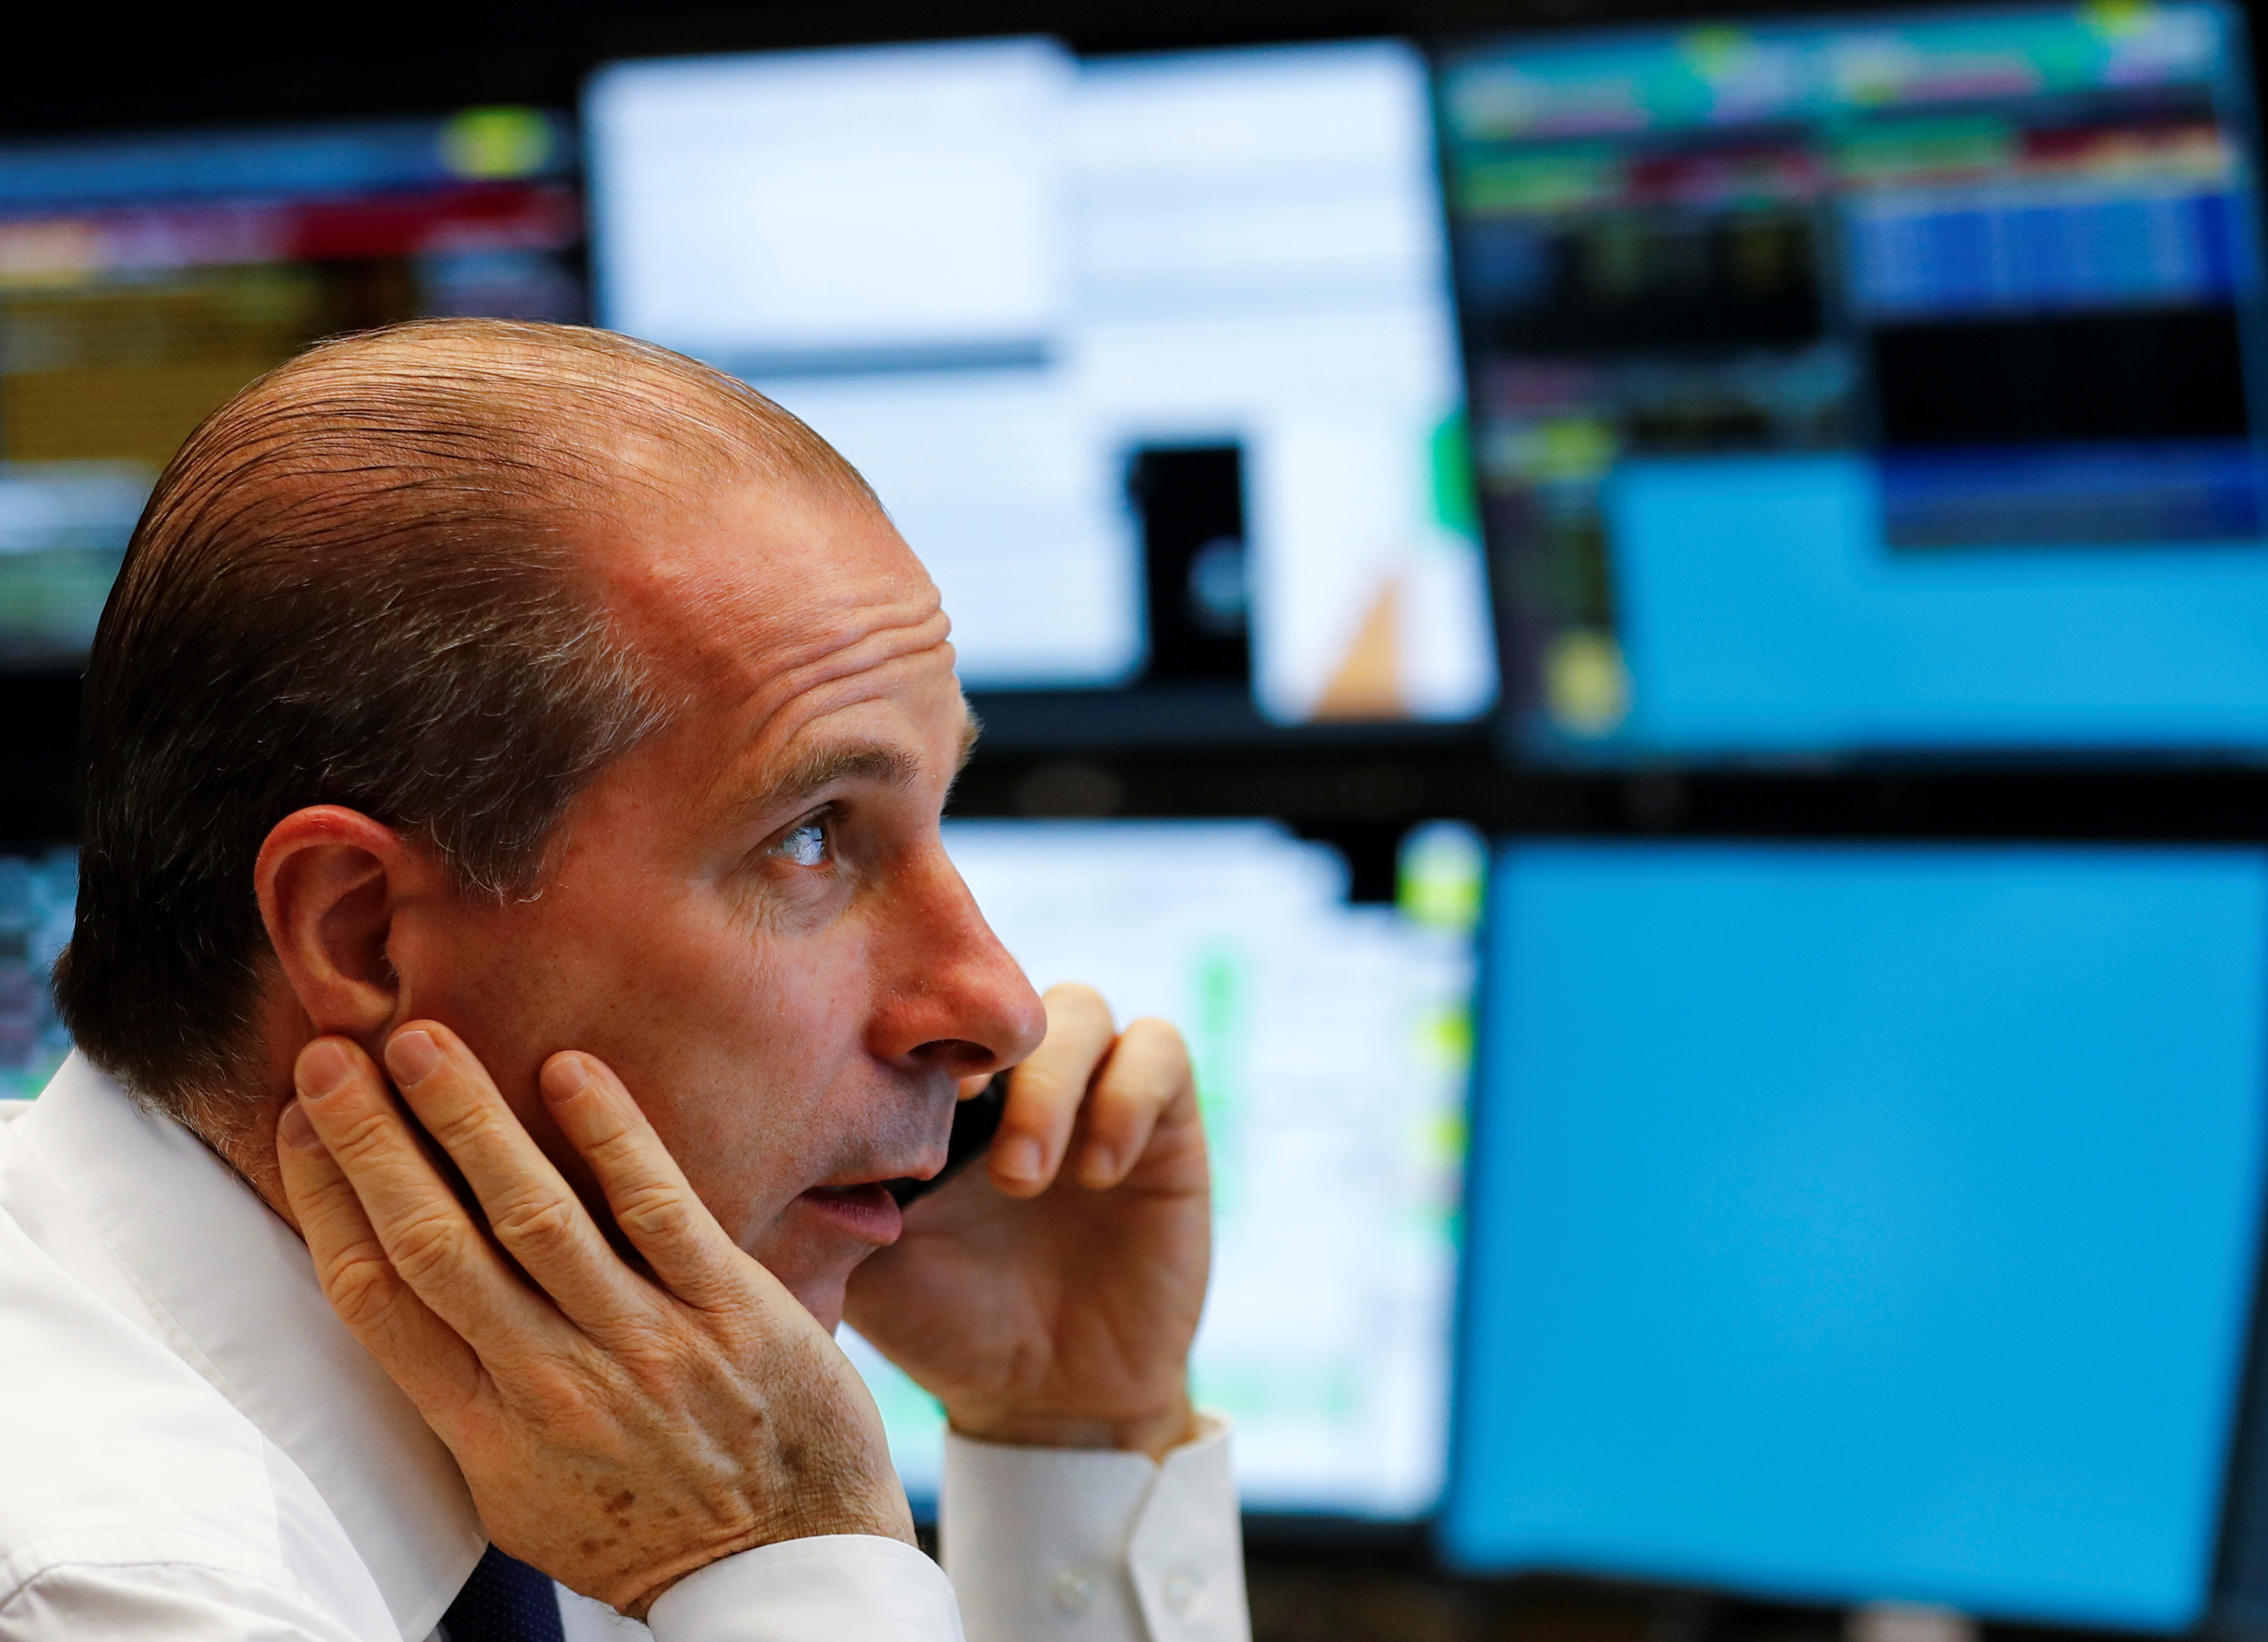 Stocks rise, dollar retreats ahead of Fed decision